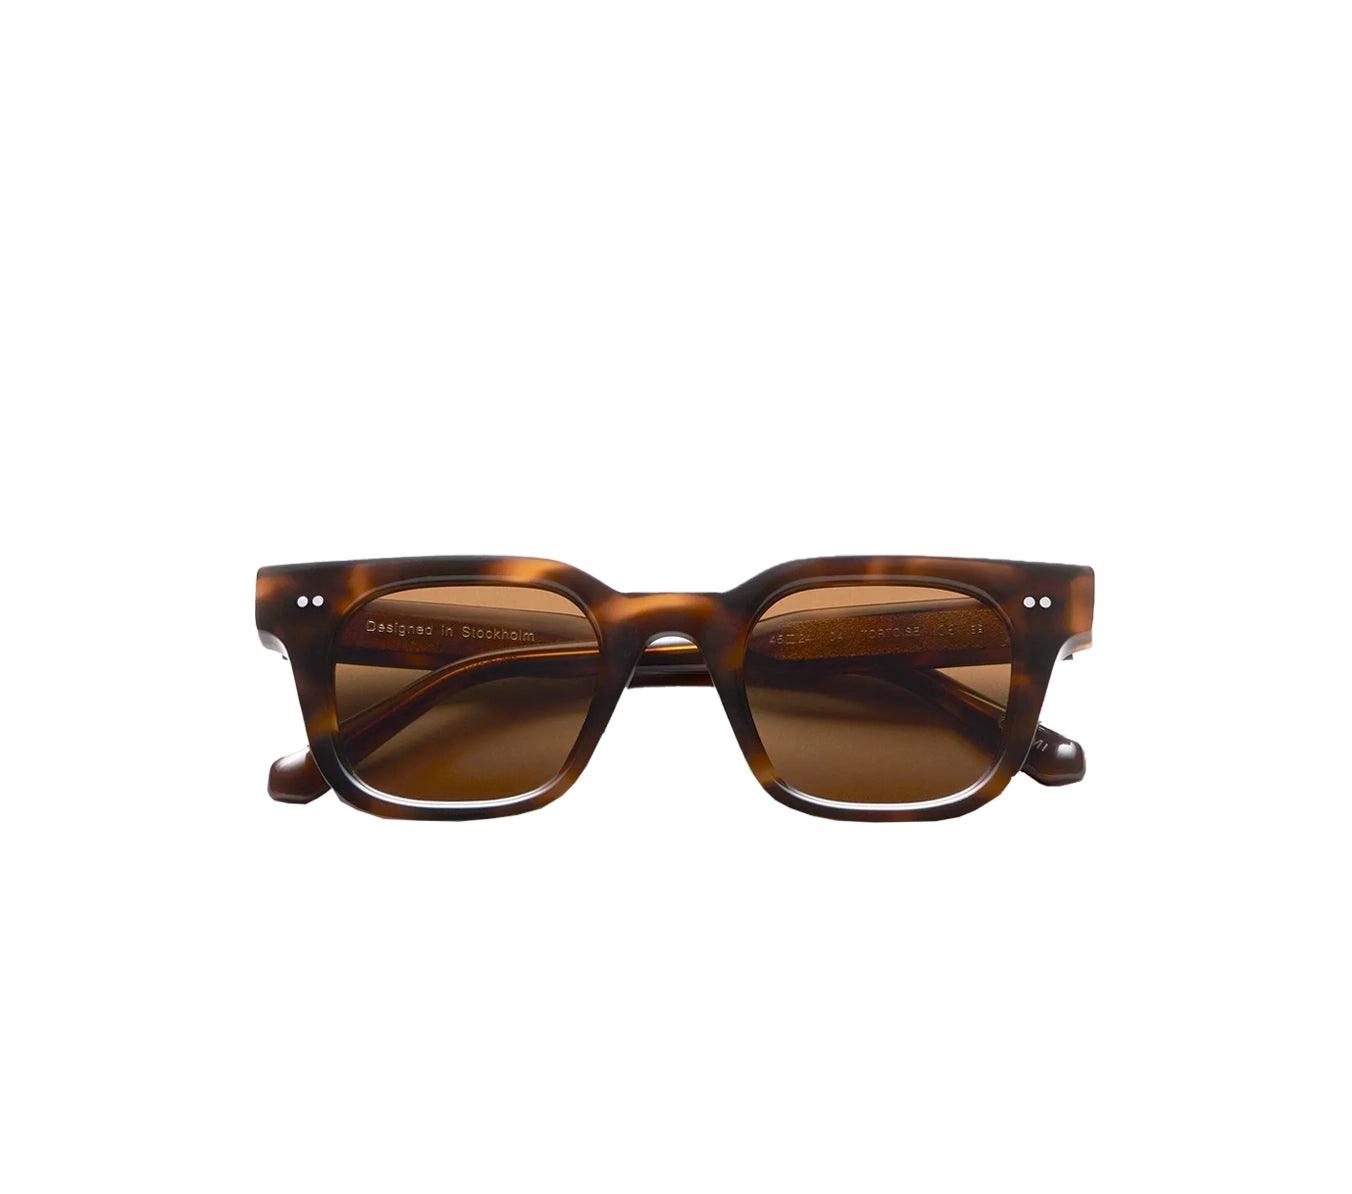 CHIMI 04 - Tortoise - One size - Sunglasses